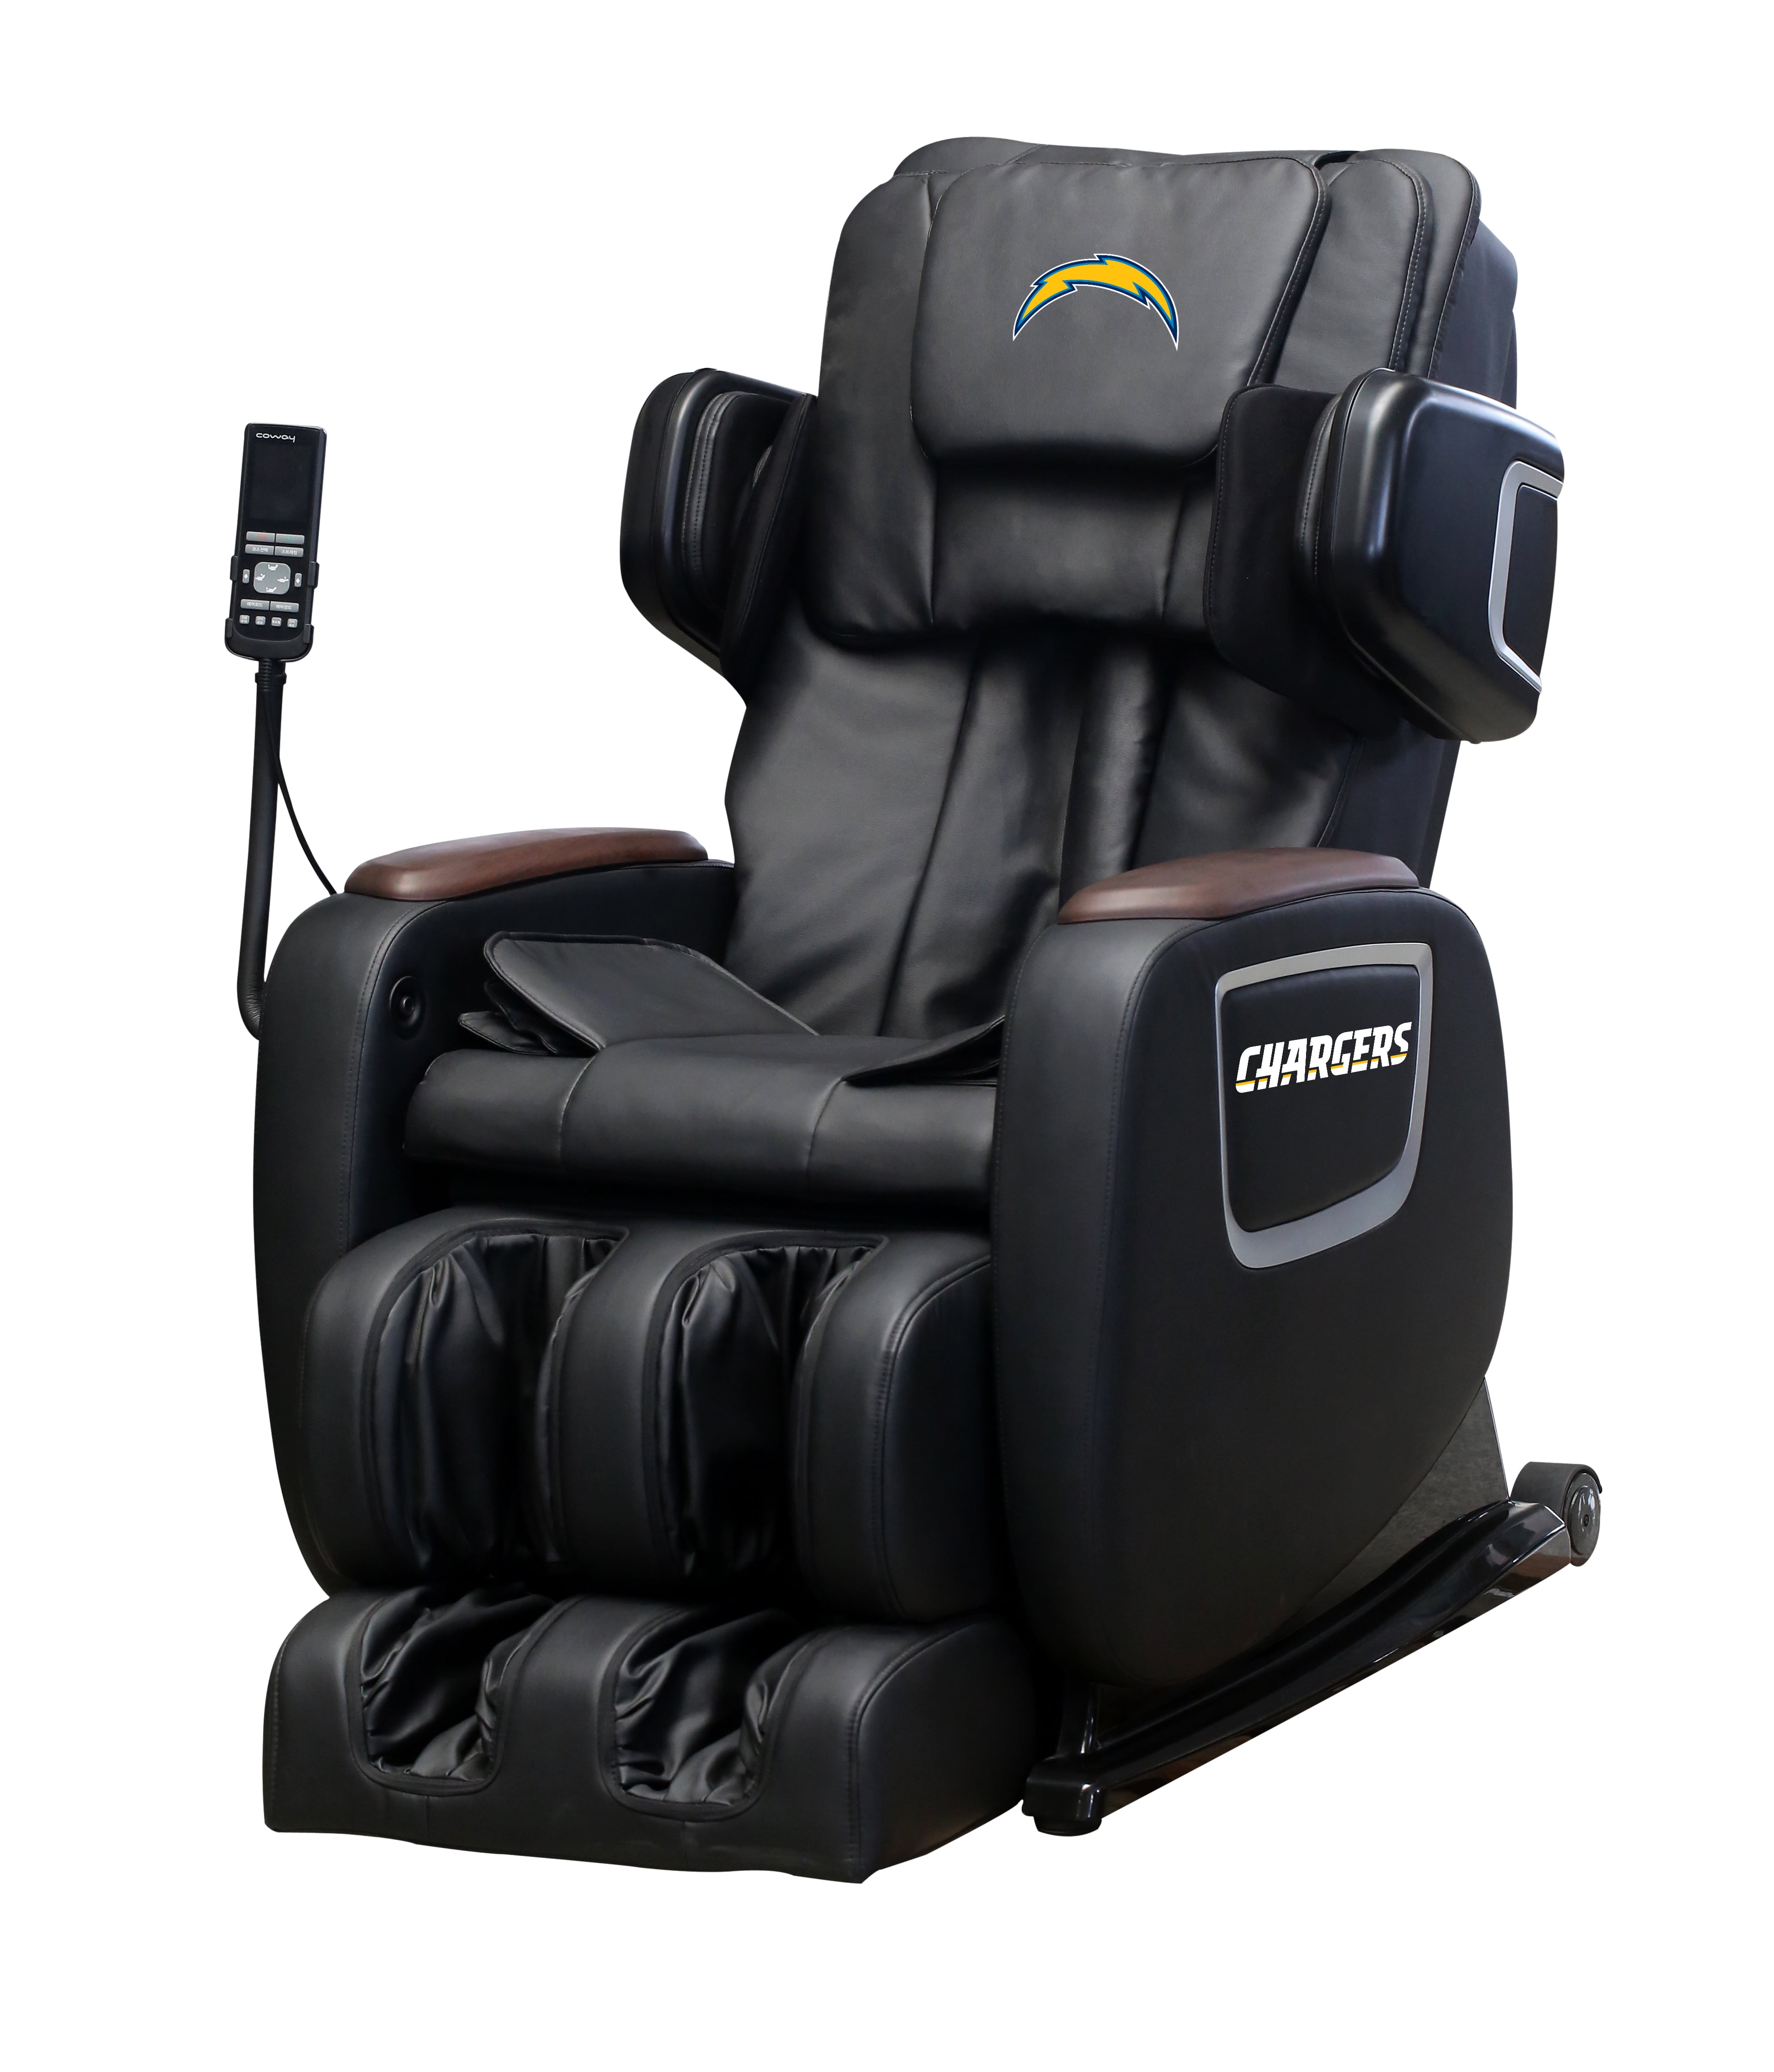 Bestmassage Zero Gravity Full Body Electric Shiatsu Massage Chair With Wireless Bluetooth